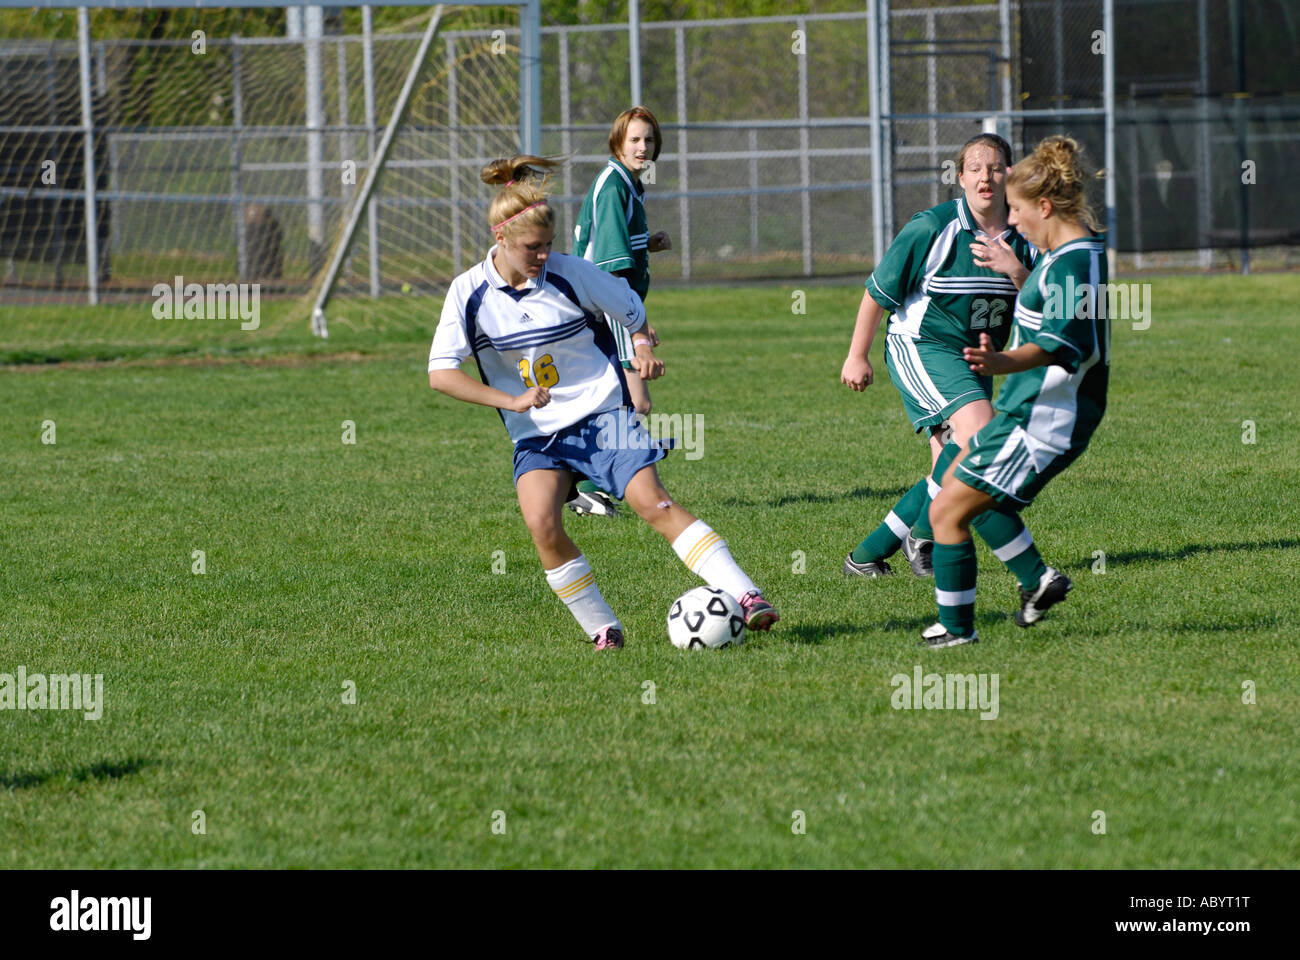 Action soccer Girls High School Banque D'Images